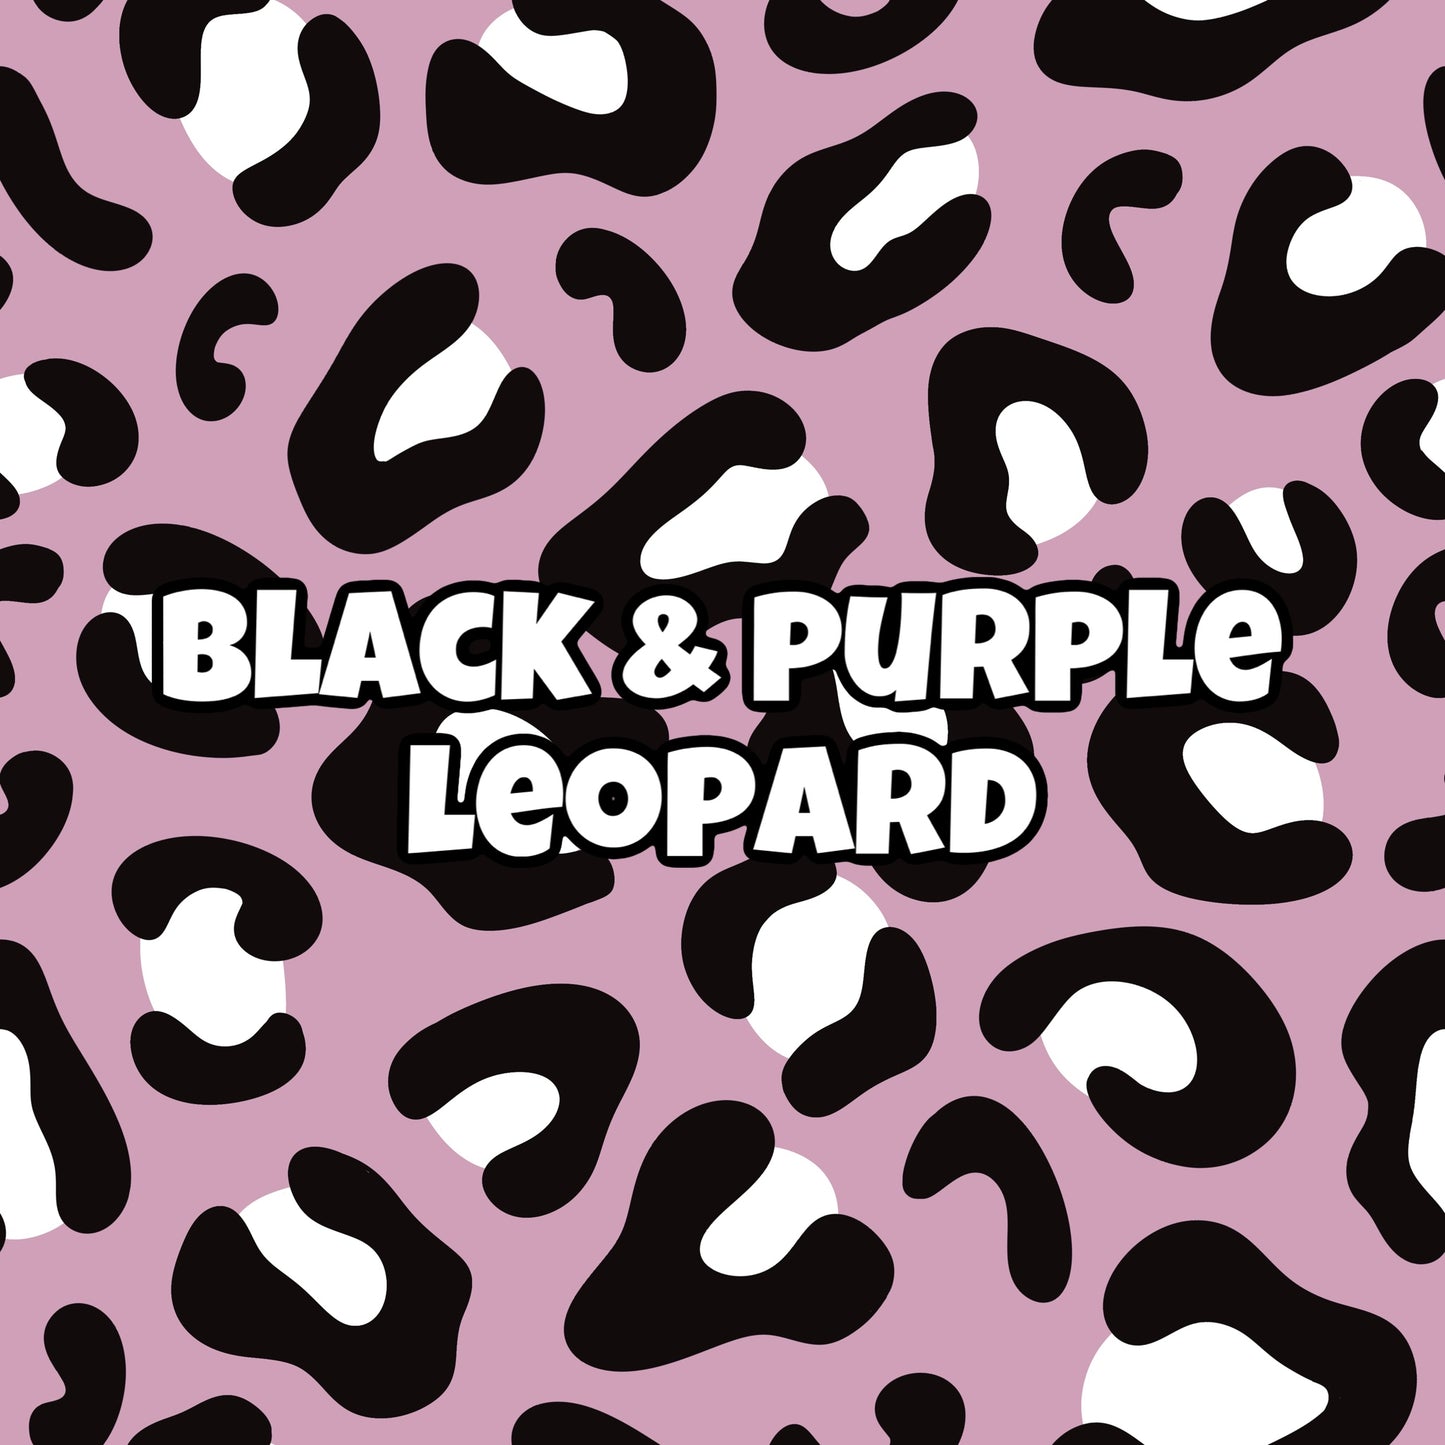 BLACK & PURPLE LEOPARD